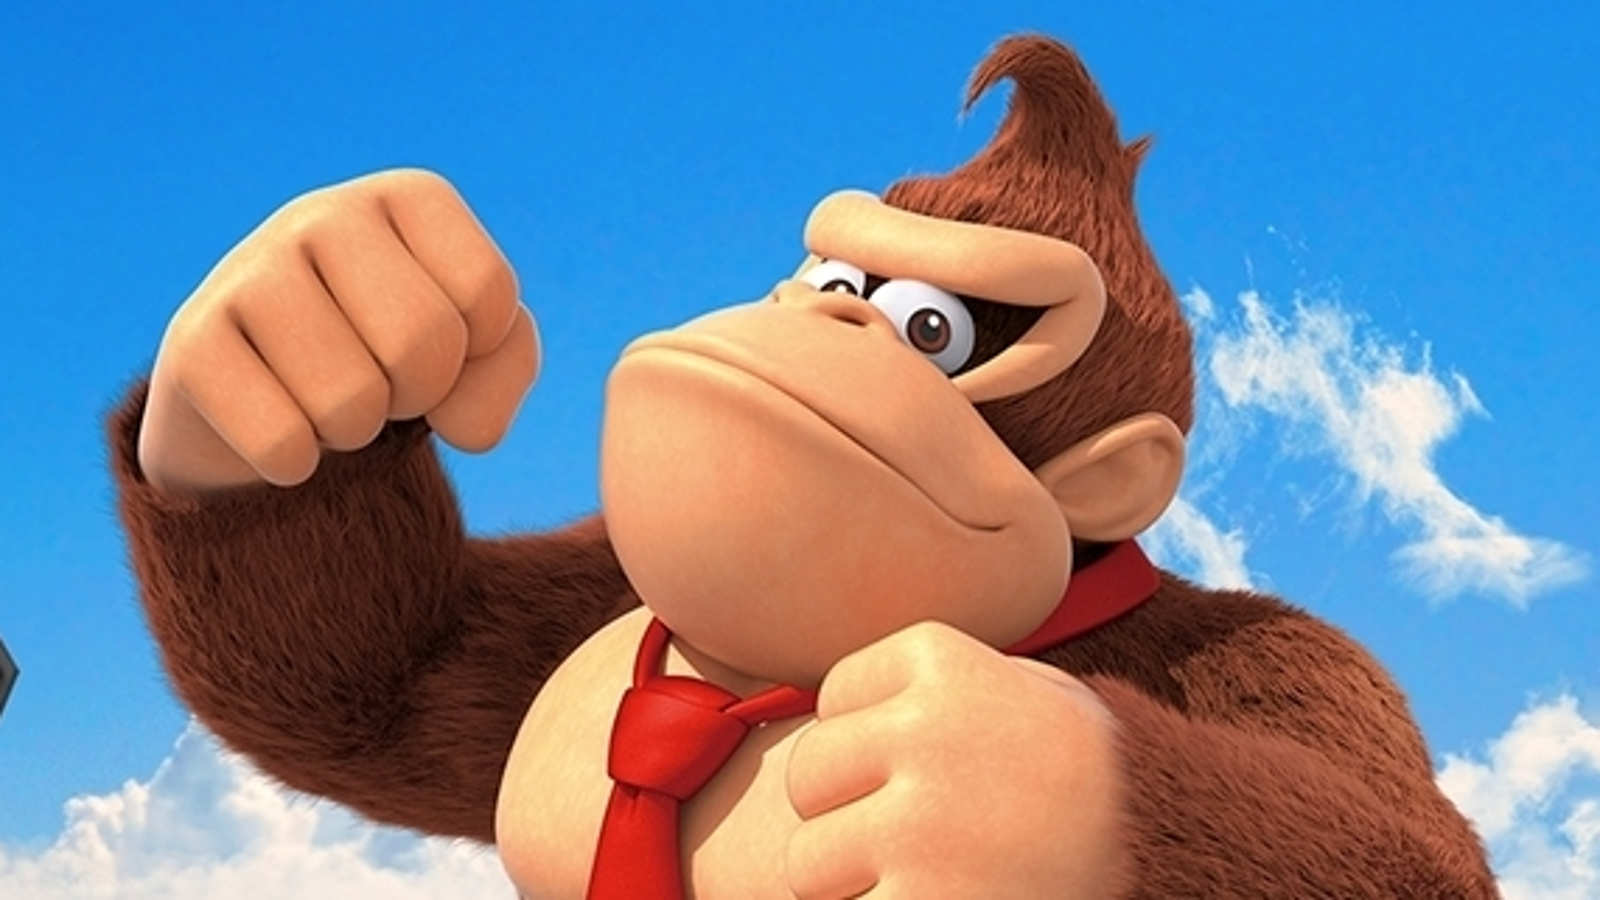 Donkey Kong expansion coming to Super Nintendo World